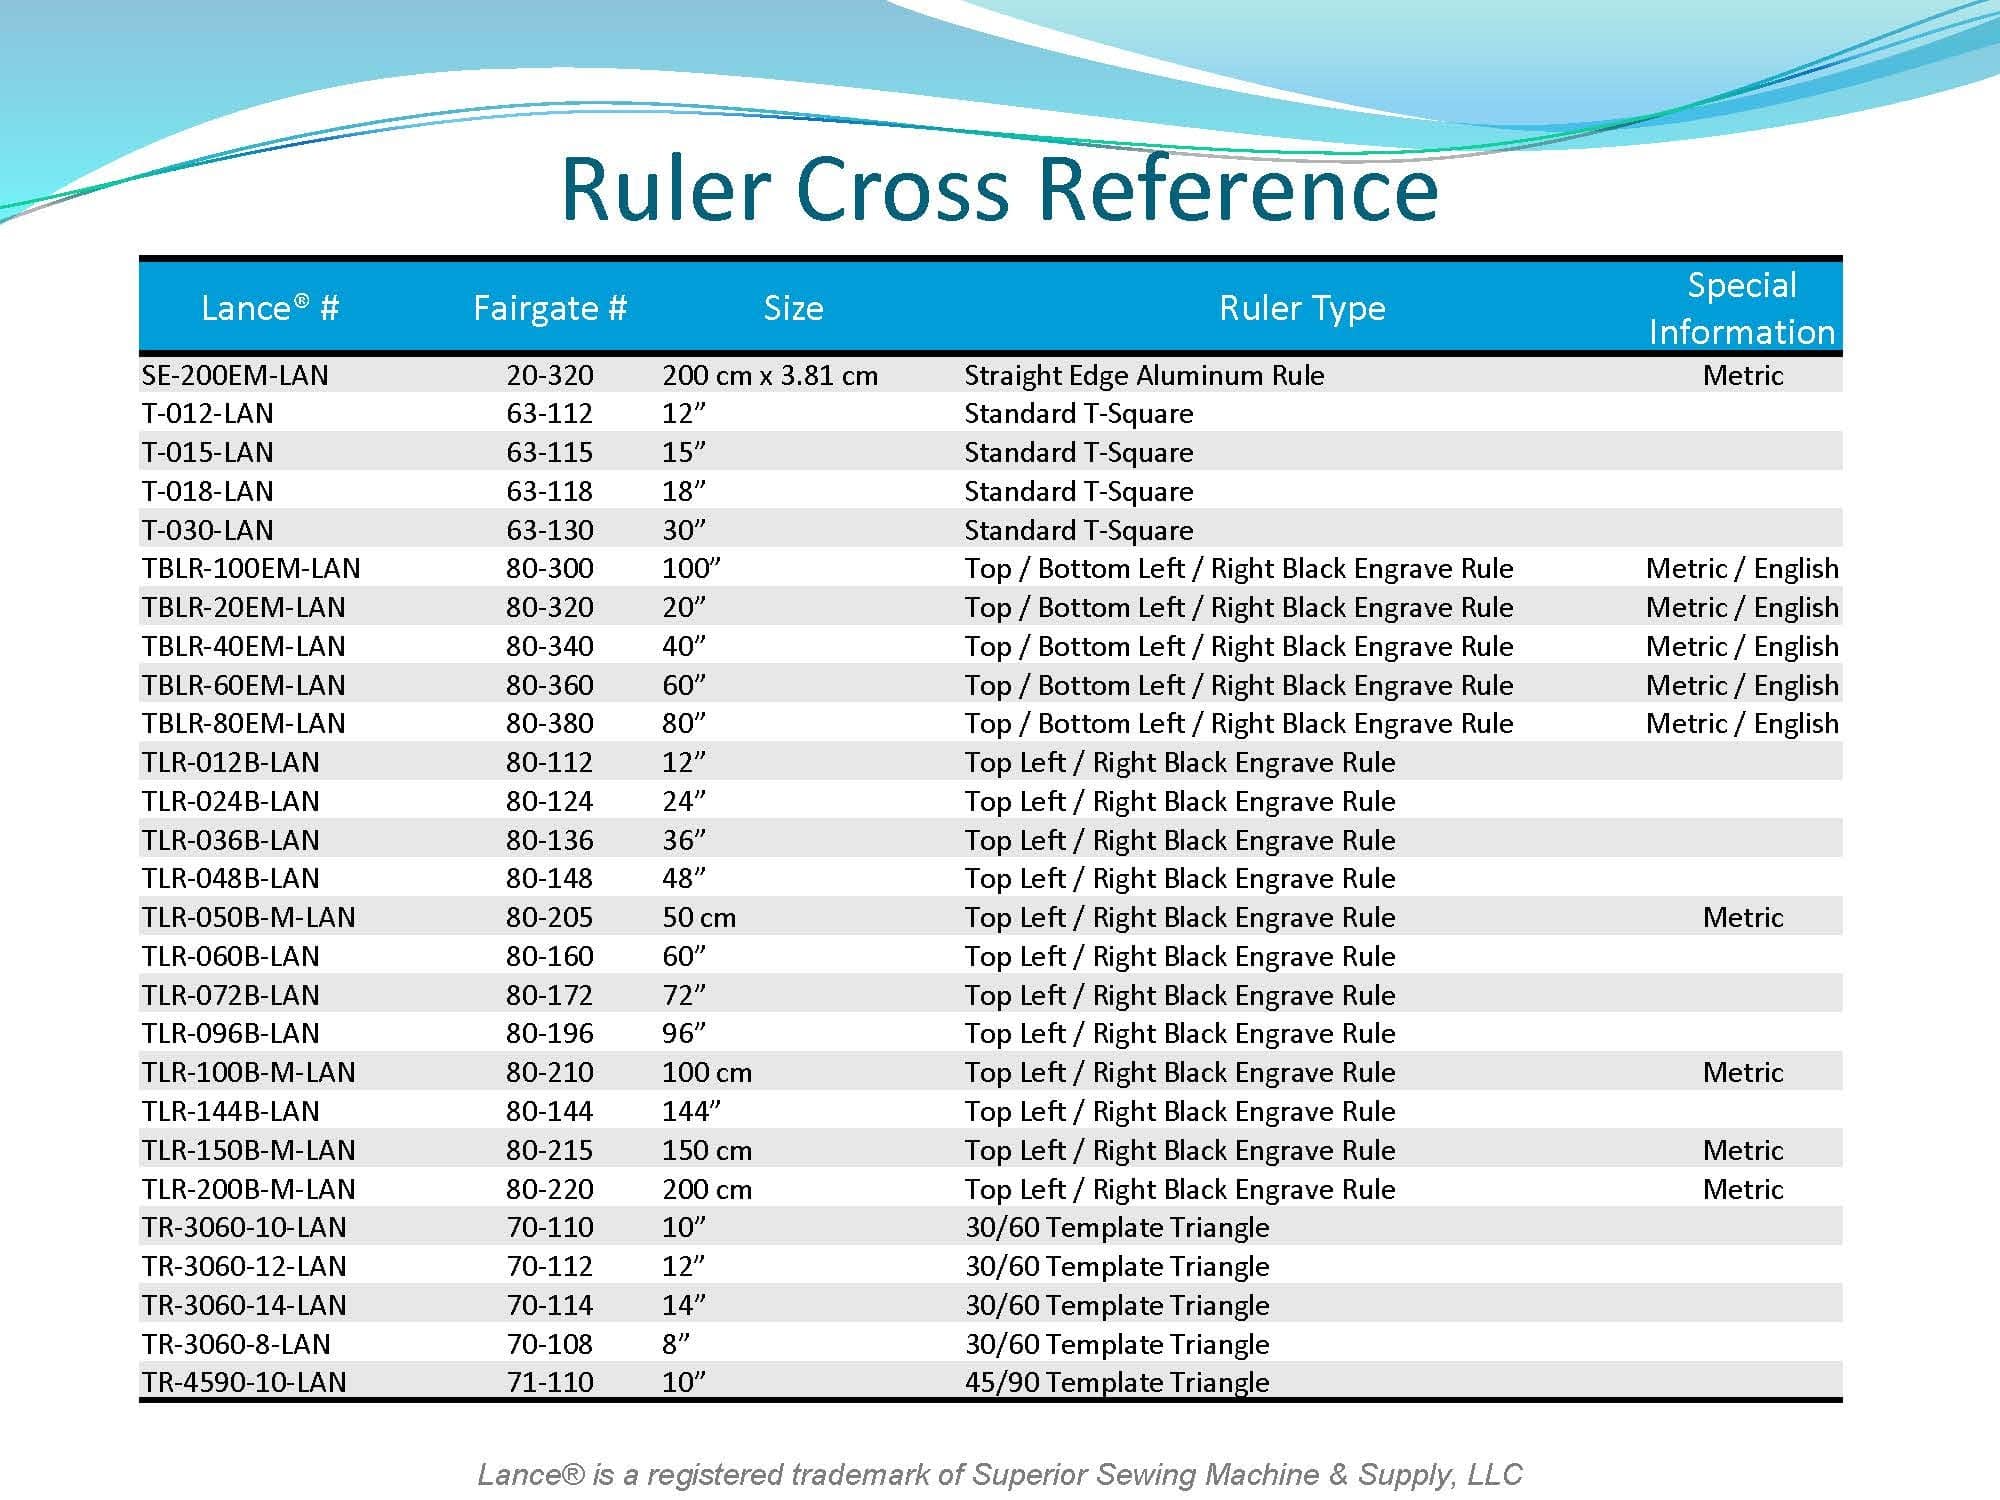 LANCE RULER CROSS REFERENCE
FAIRGATE # to LANCE #
COMPLETE LANCE RULER LIST